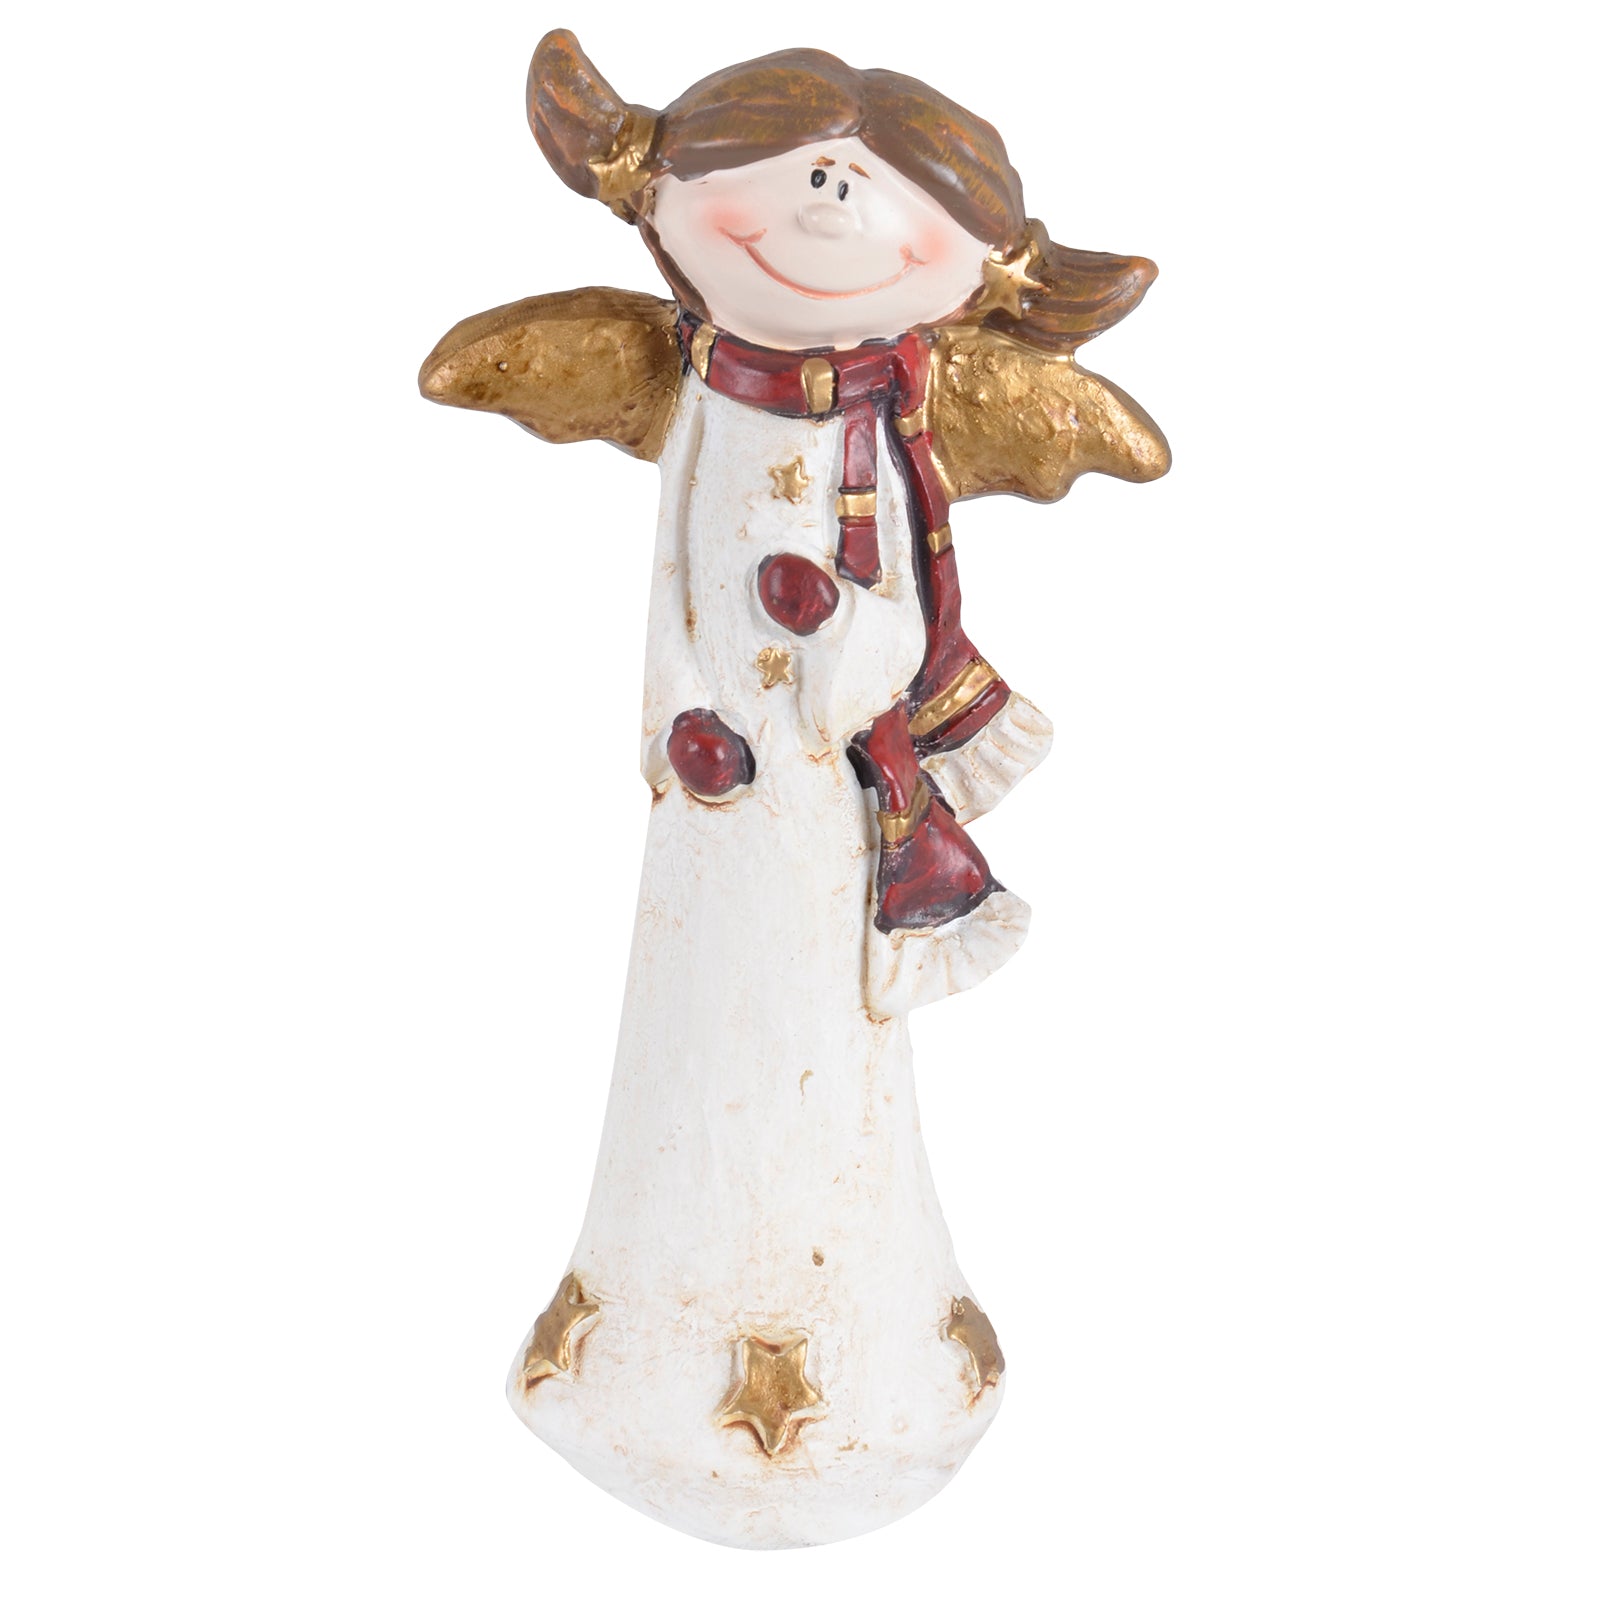 Mr Crimbo Angel Ornament Resin Christmas Decoration - MrCrimbo.co.uk -XS4309 - 13cm -angel figurine